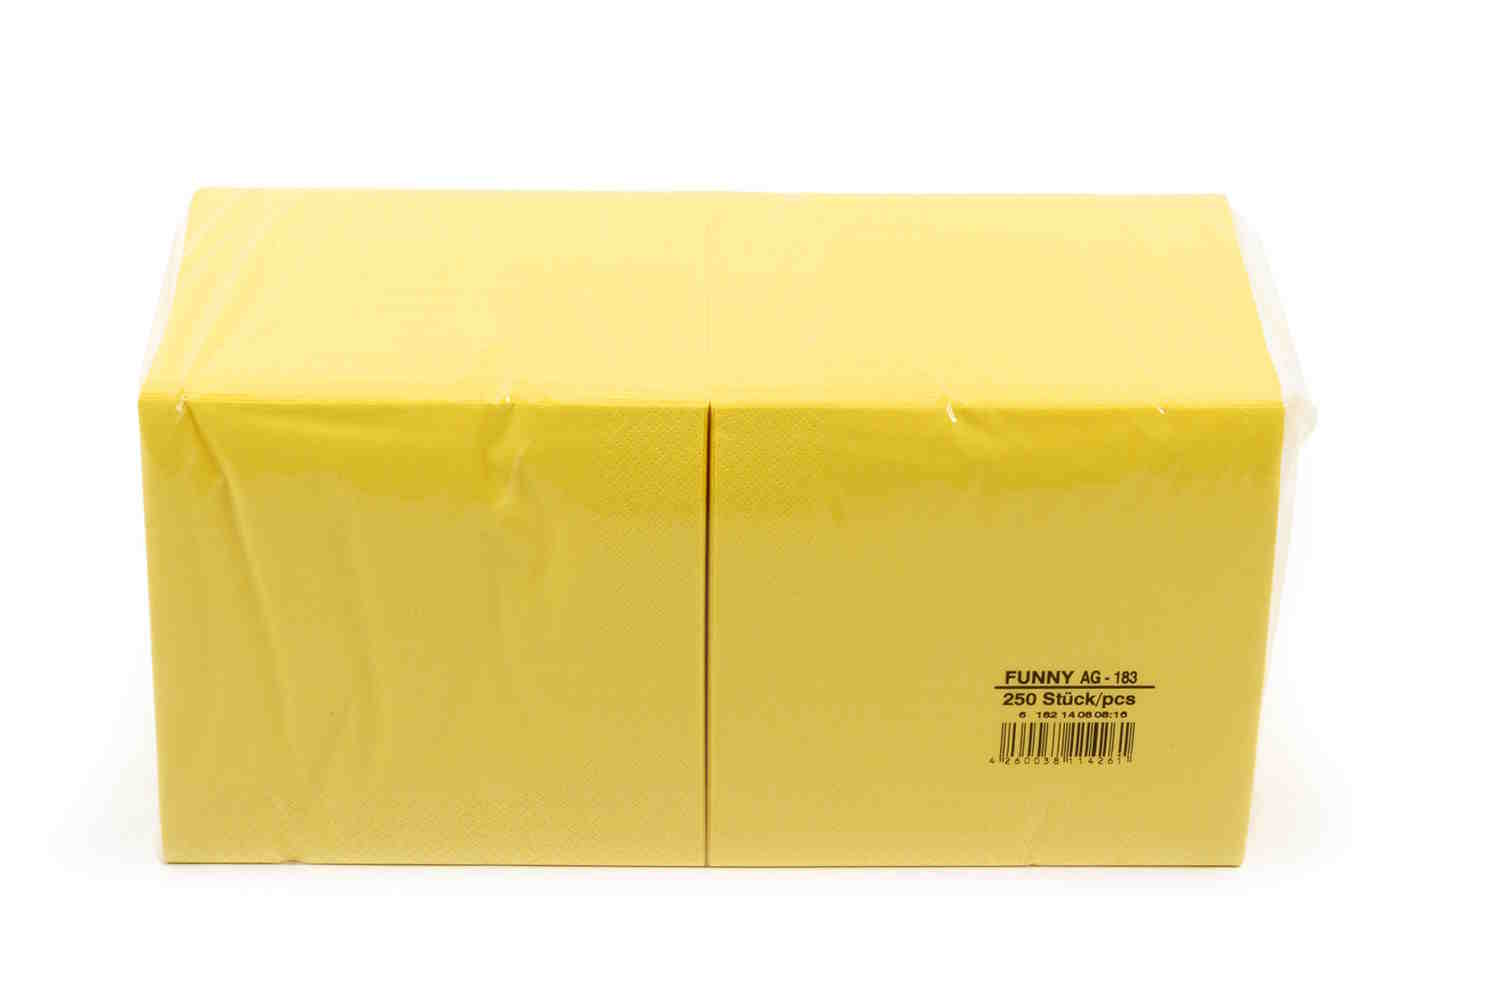 Funny Tafelserviette, 1/4 Falz, gelb, 3lagig, 100% Zellstoff, | Karton = 4 x 250 = 1000 Stück